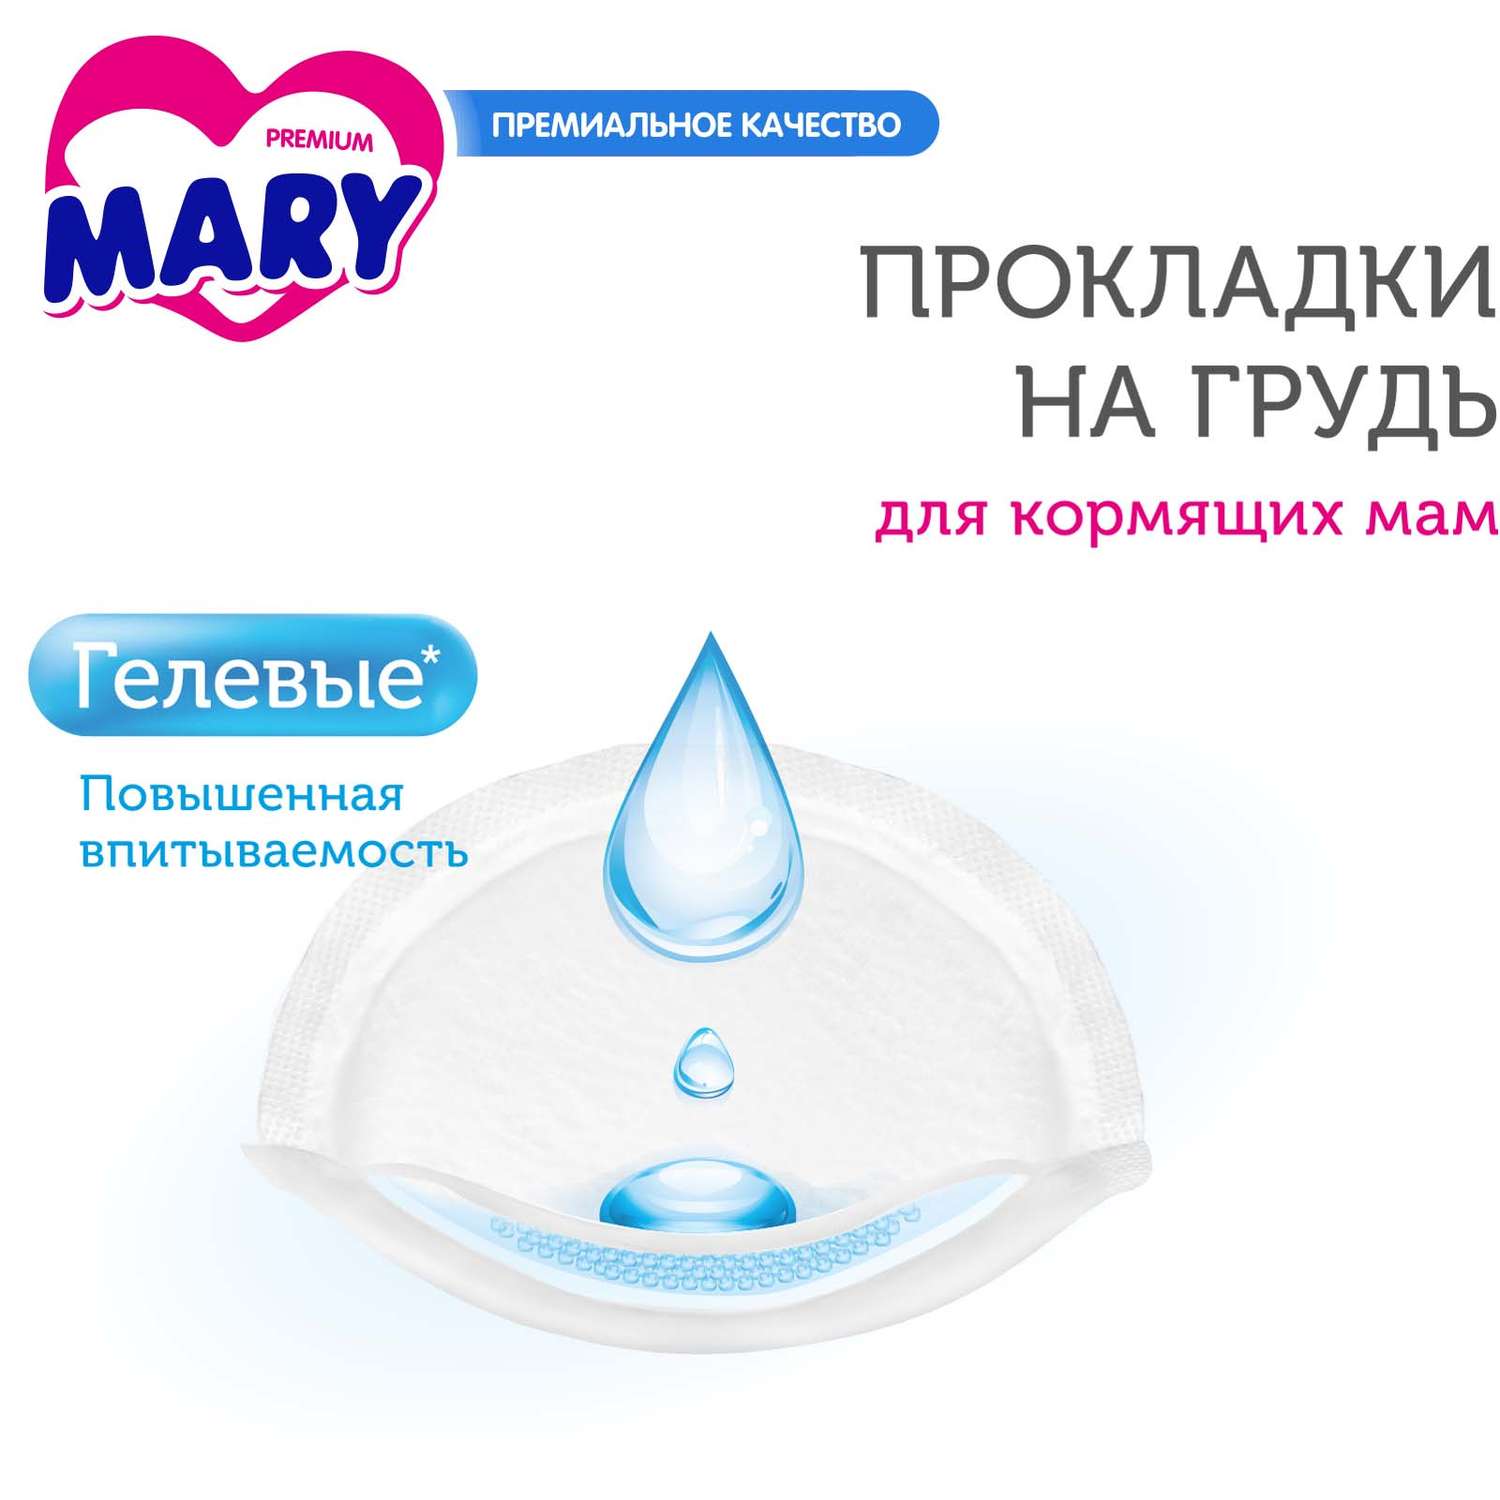 Прокладки для груди Mary Premium гелевые 60 шт - фото 5